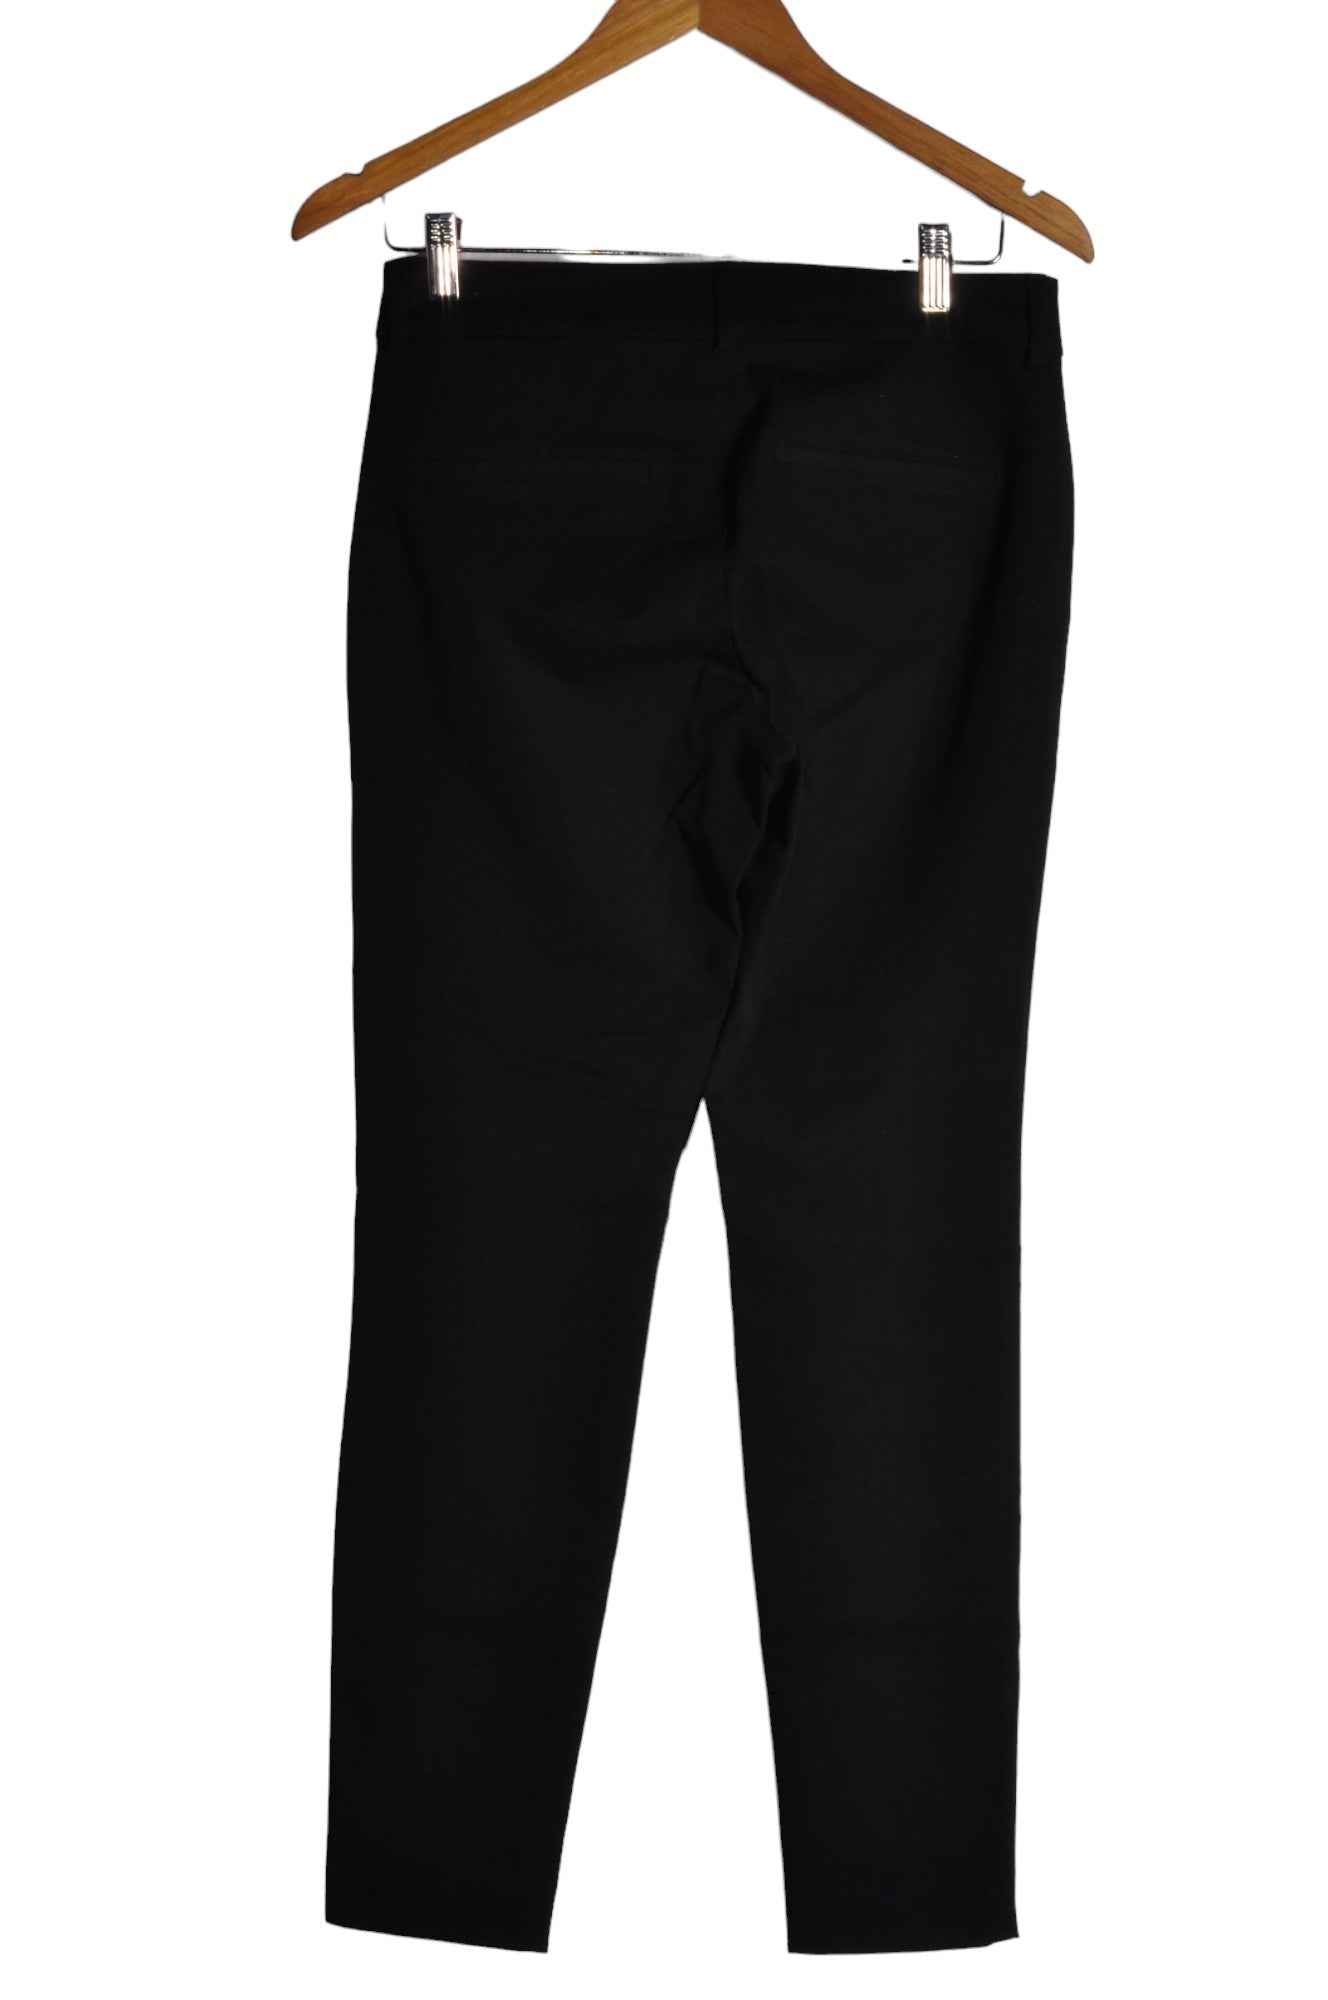 OLD NAVY Women Work Pants Regular fit in Black - Size 4 | 18 $ KOOP